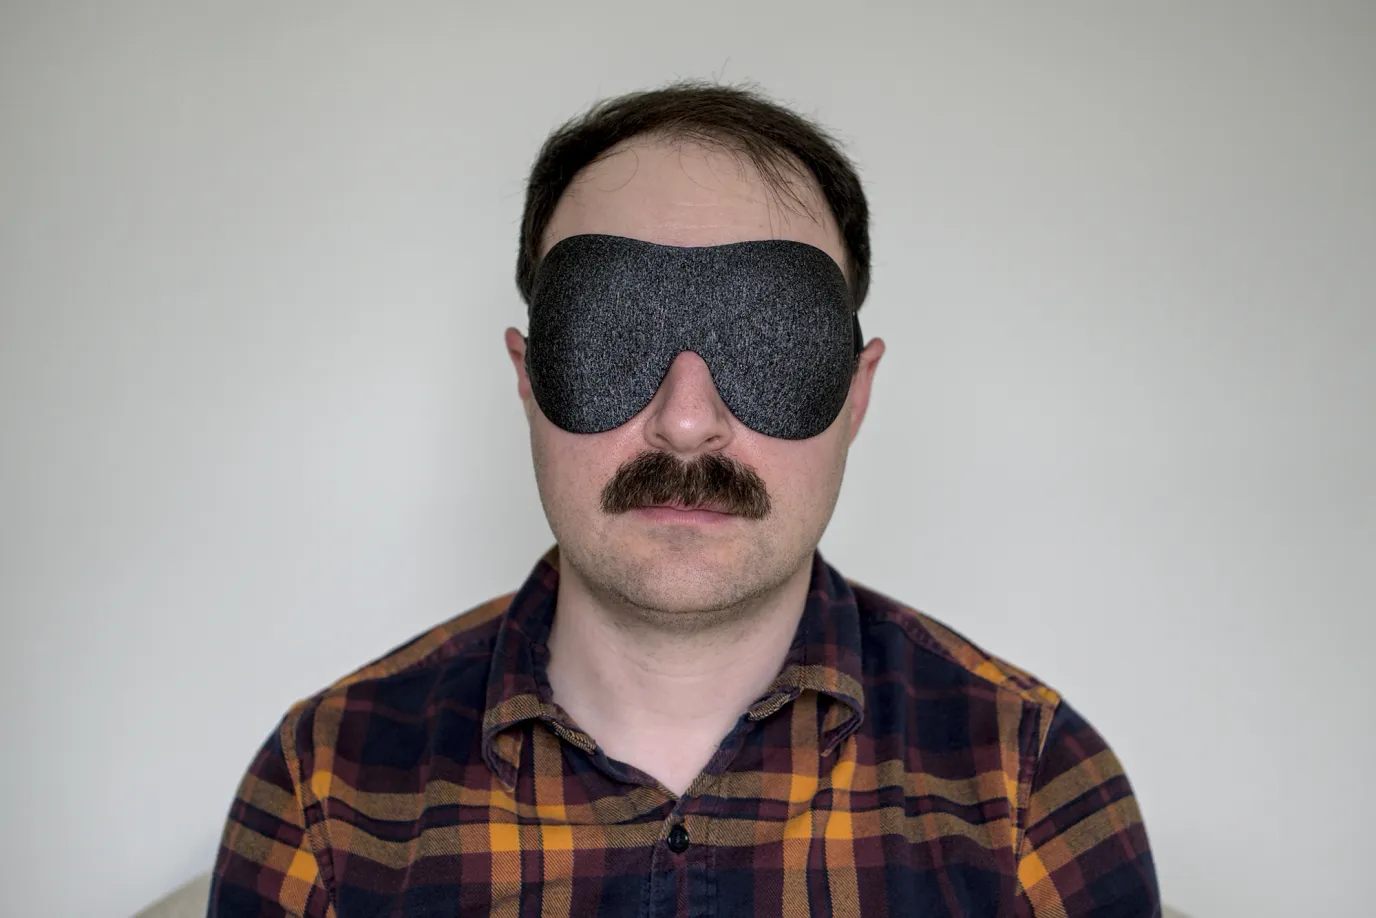 A photo of me wearing an LKY DIGITAL sleep mask